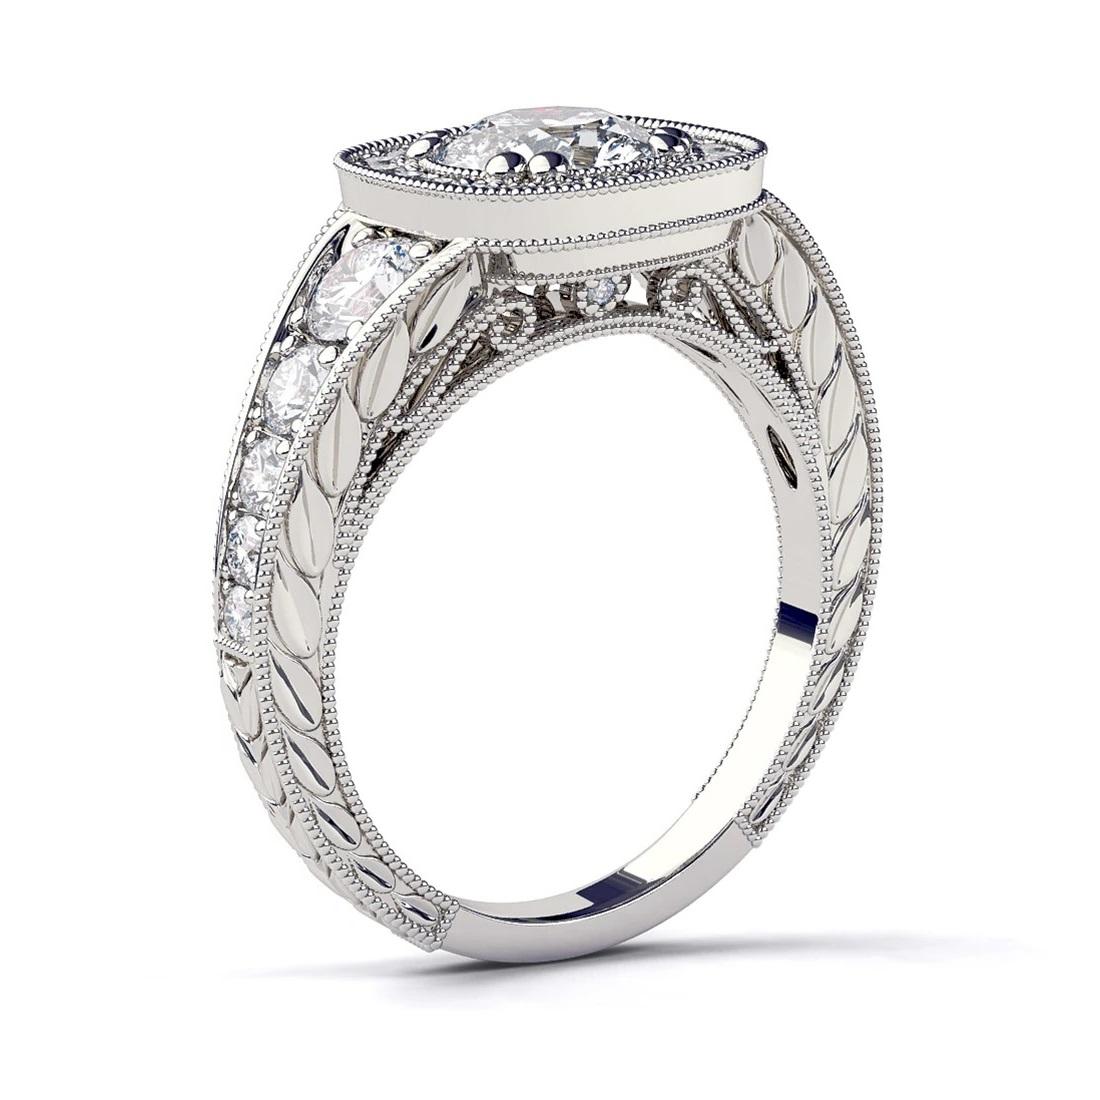 1.8 ct diamond ring